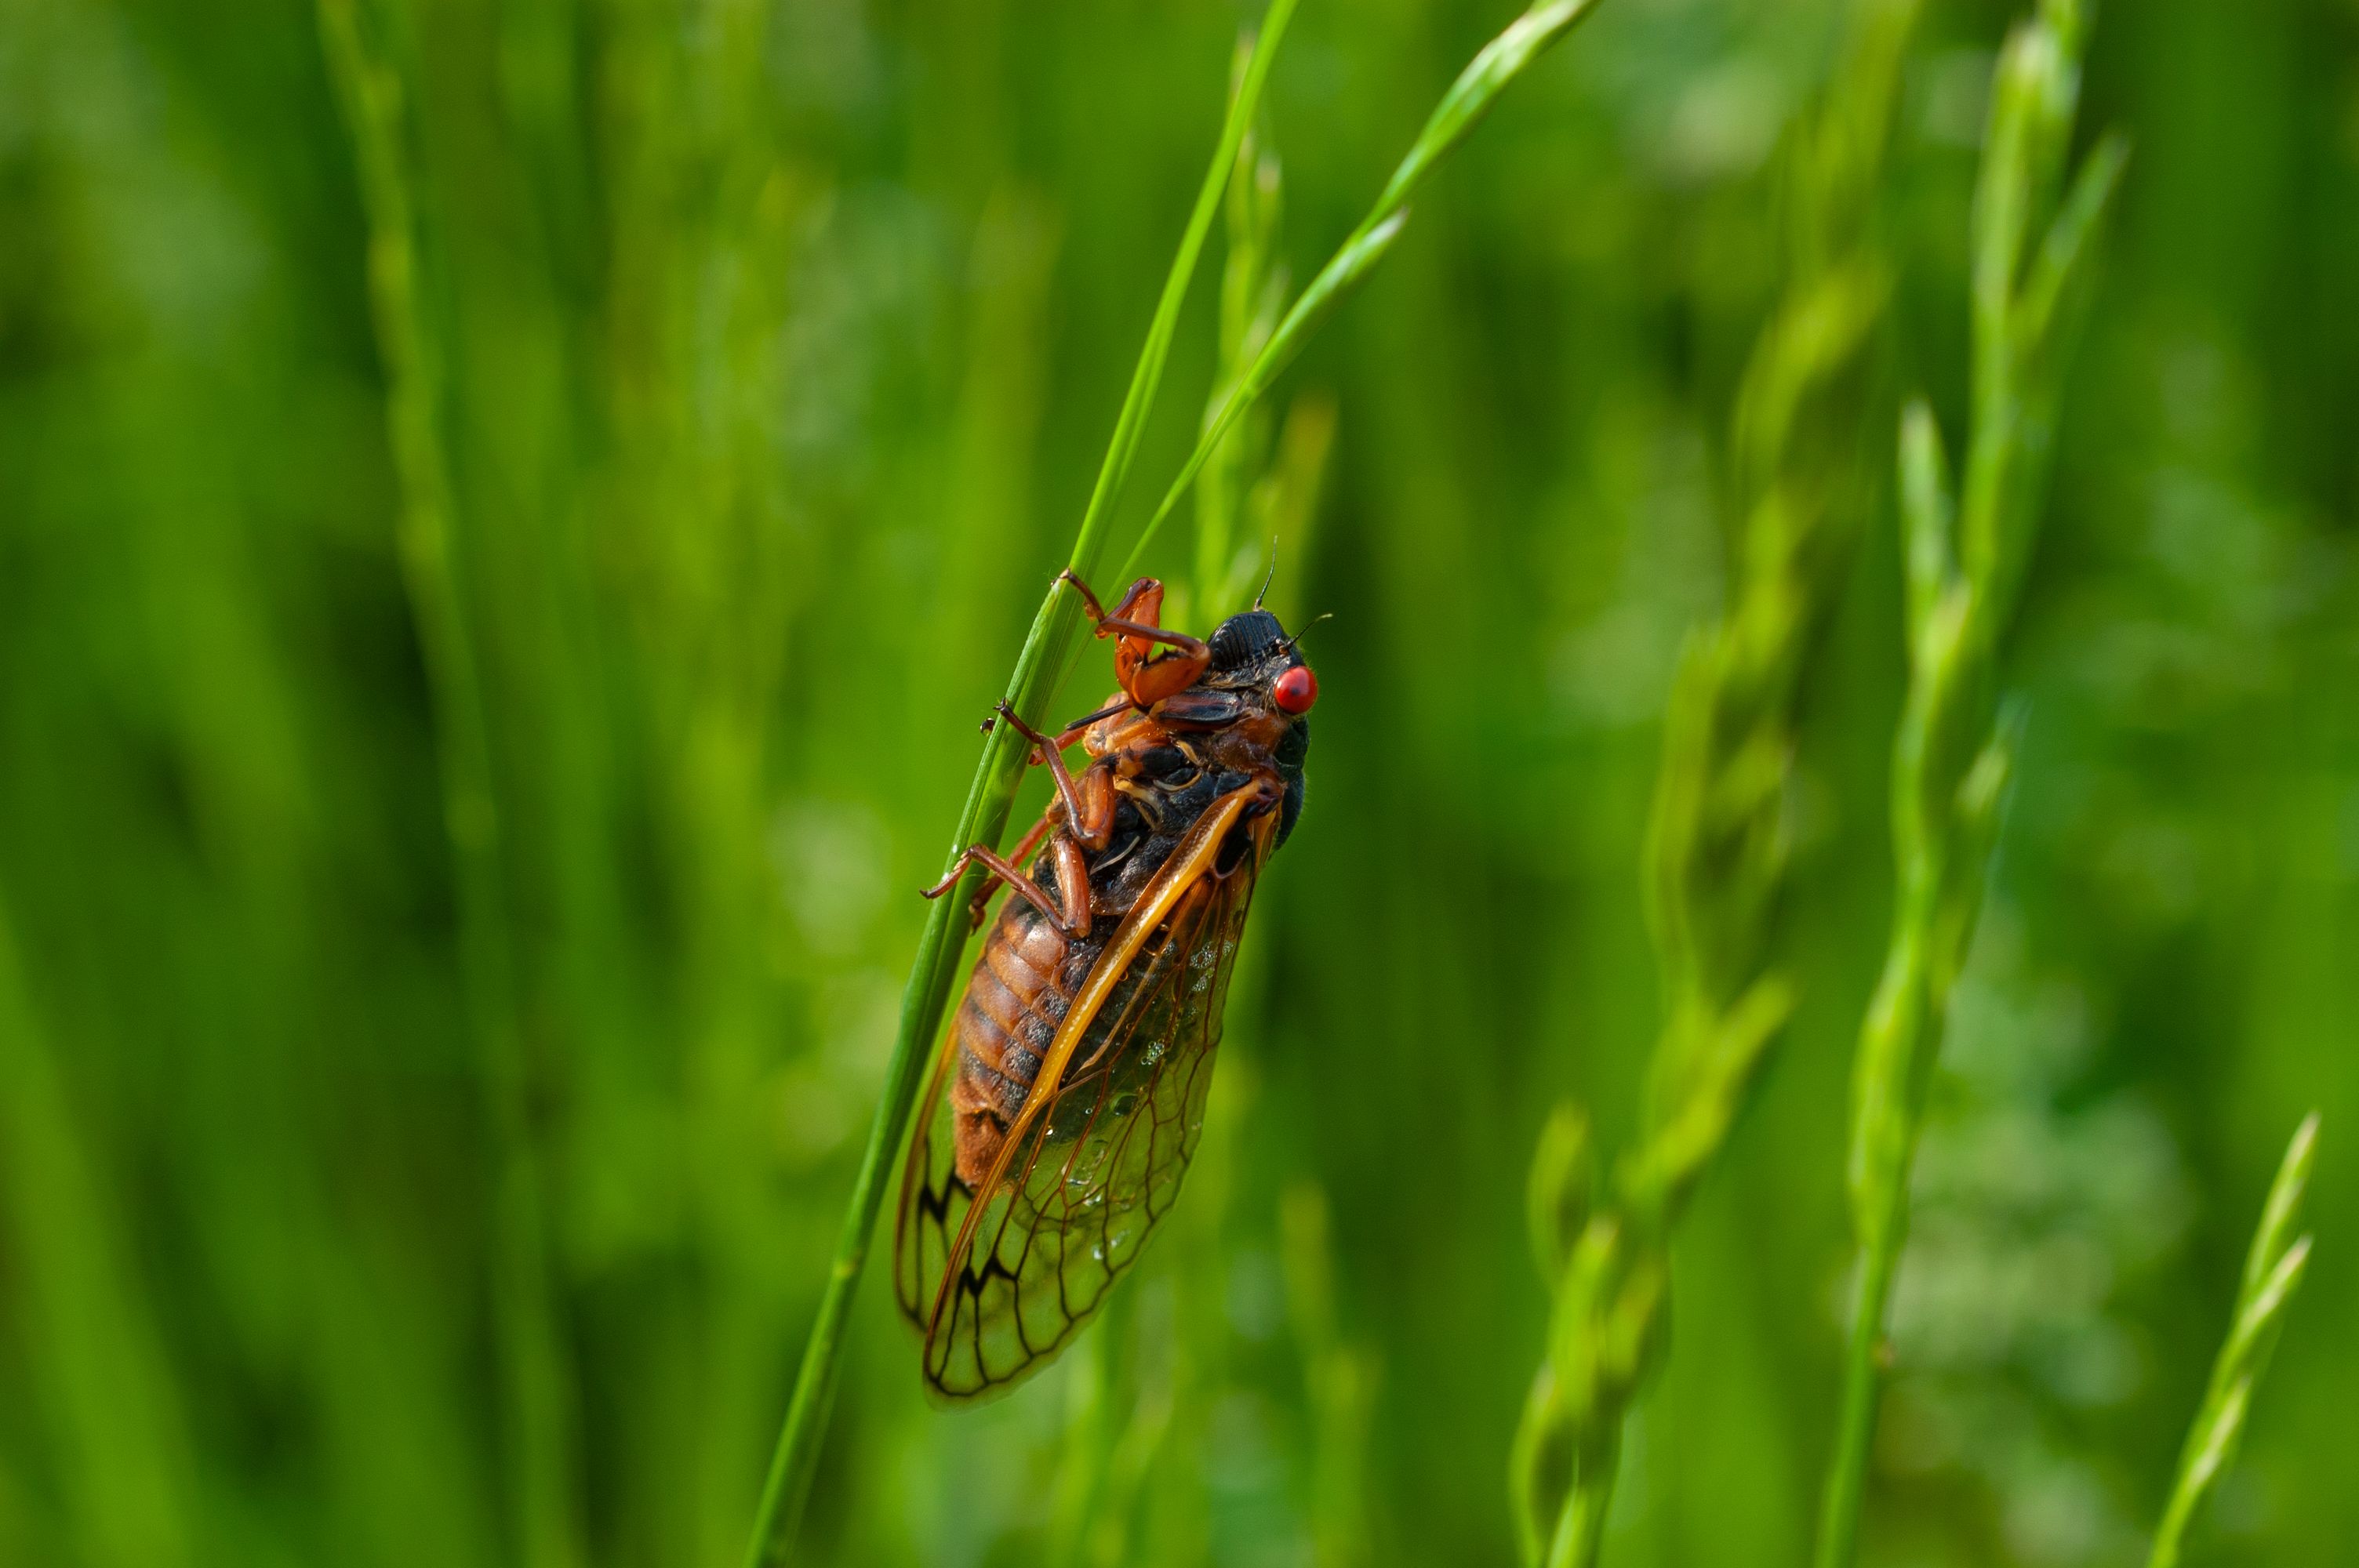 8 Tips To Survive Cicada Season - loud scream 1 hour roblox death sound